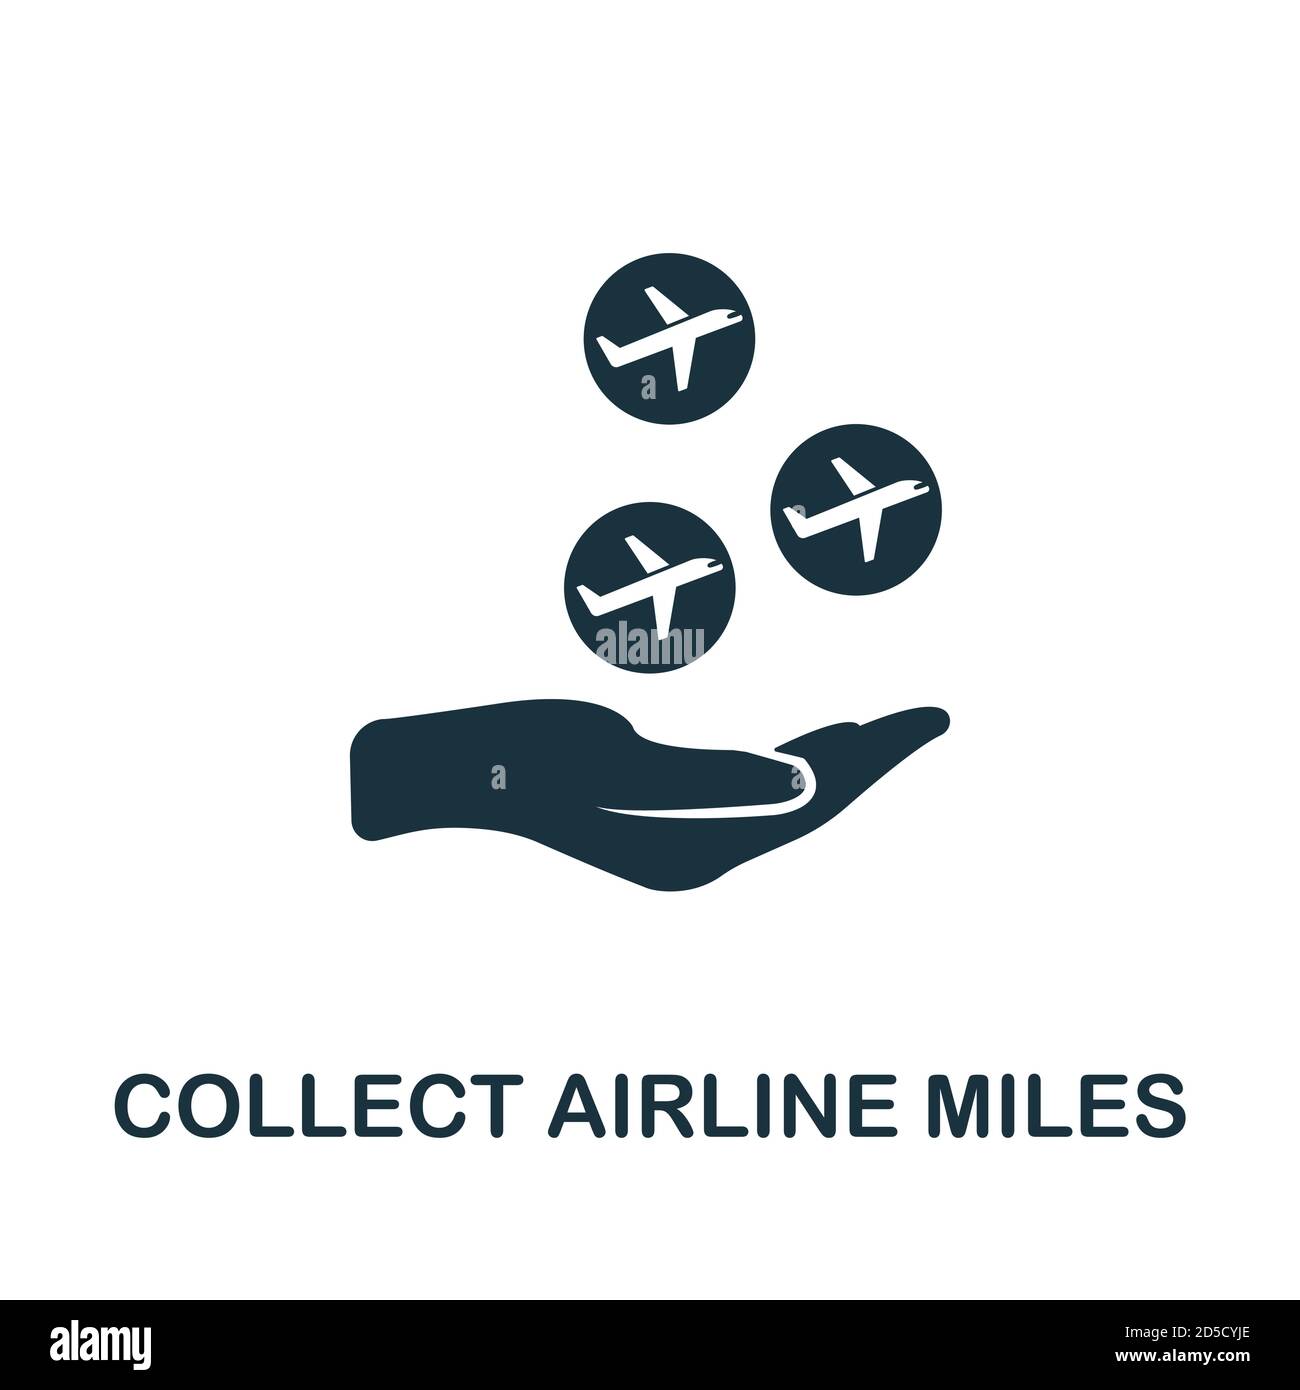 Airline miles